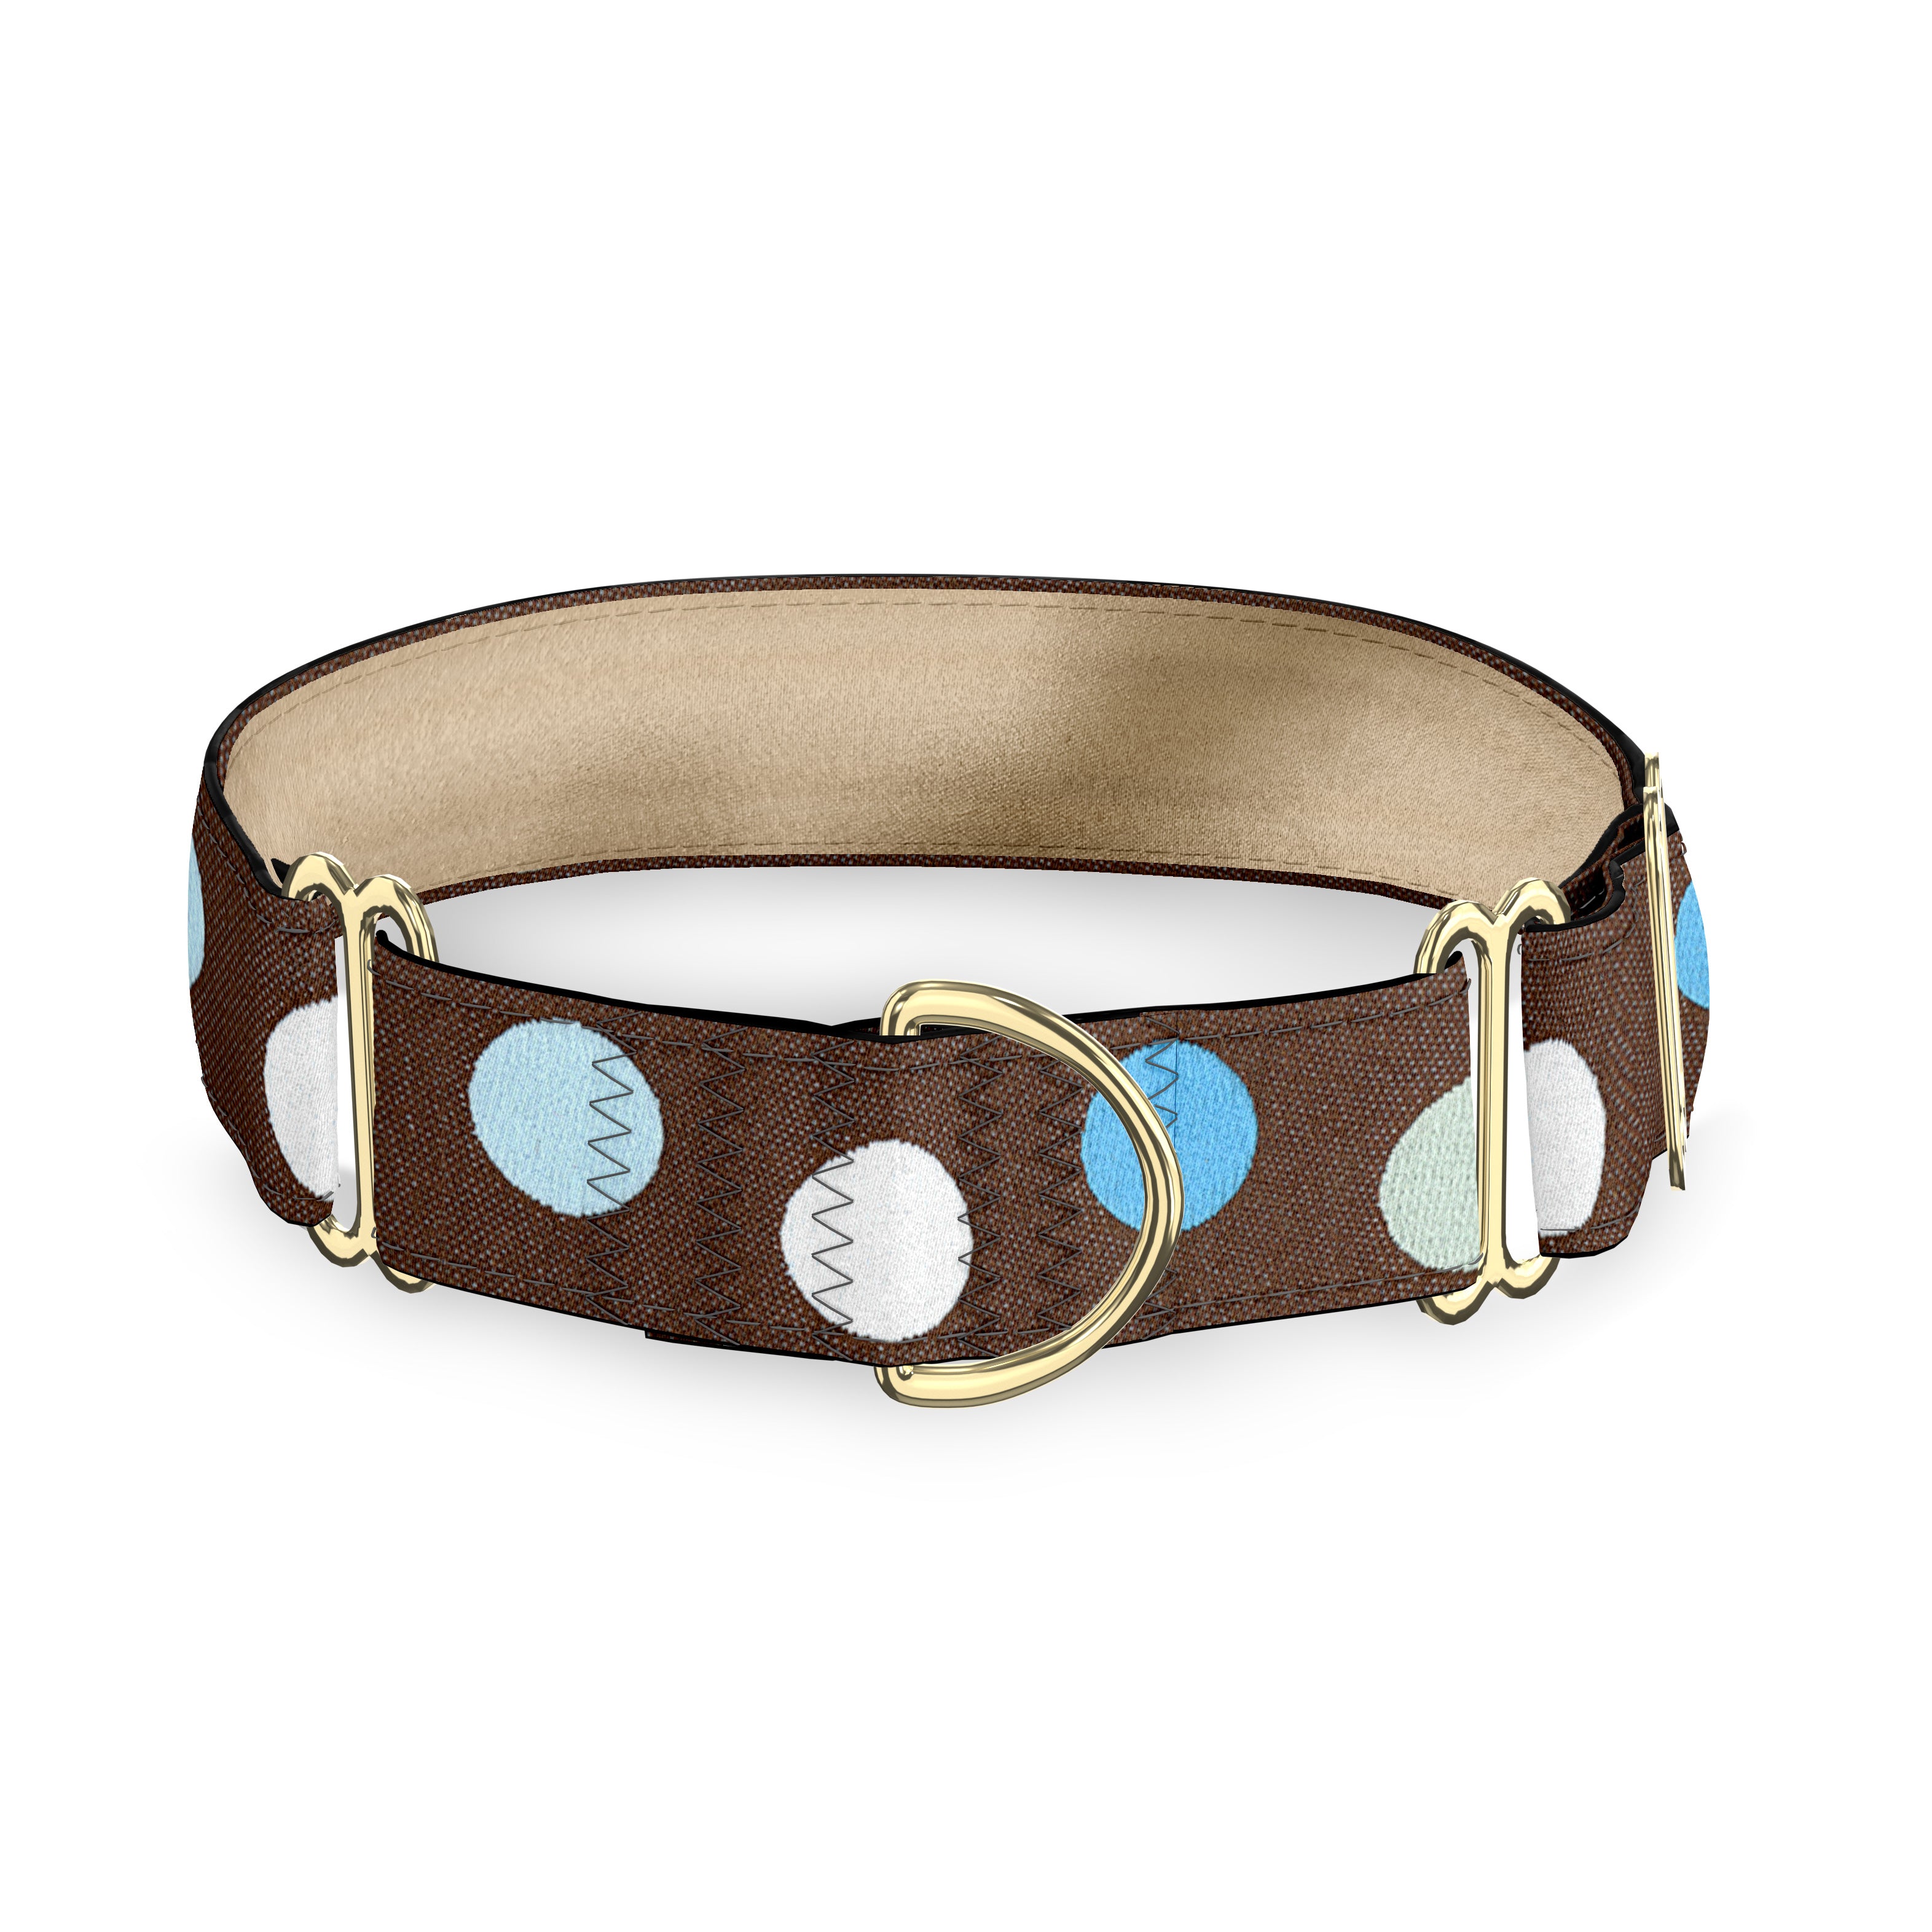 Hippodrome Brown and Blue Dog Collar